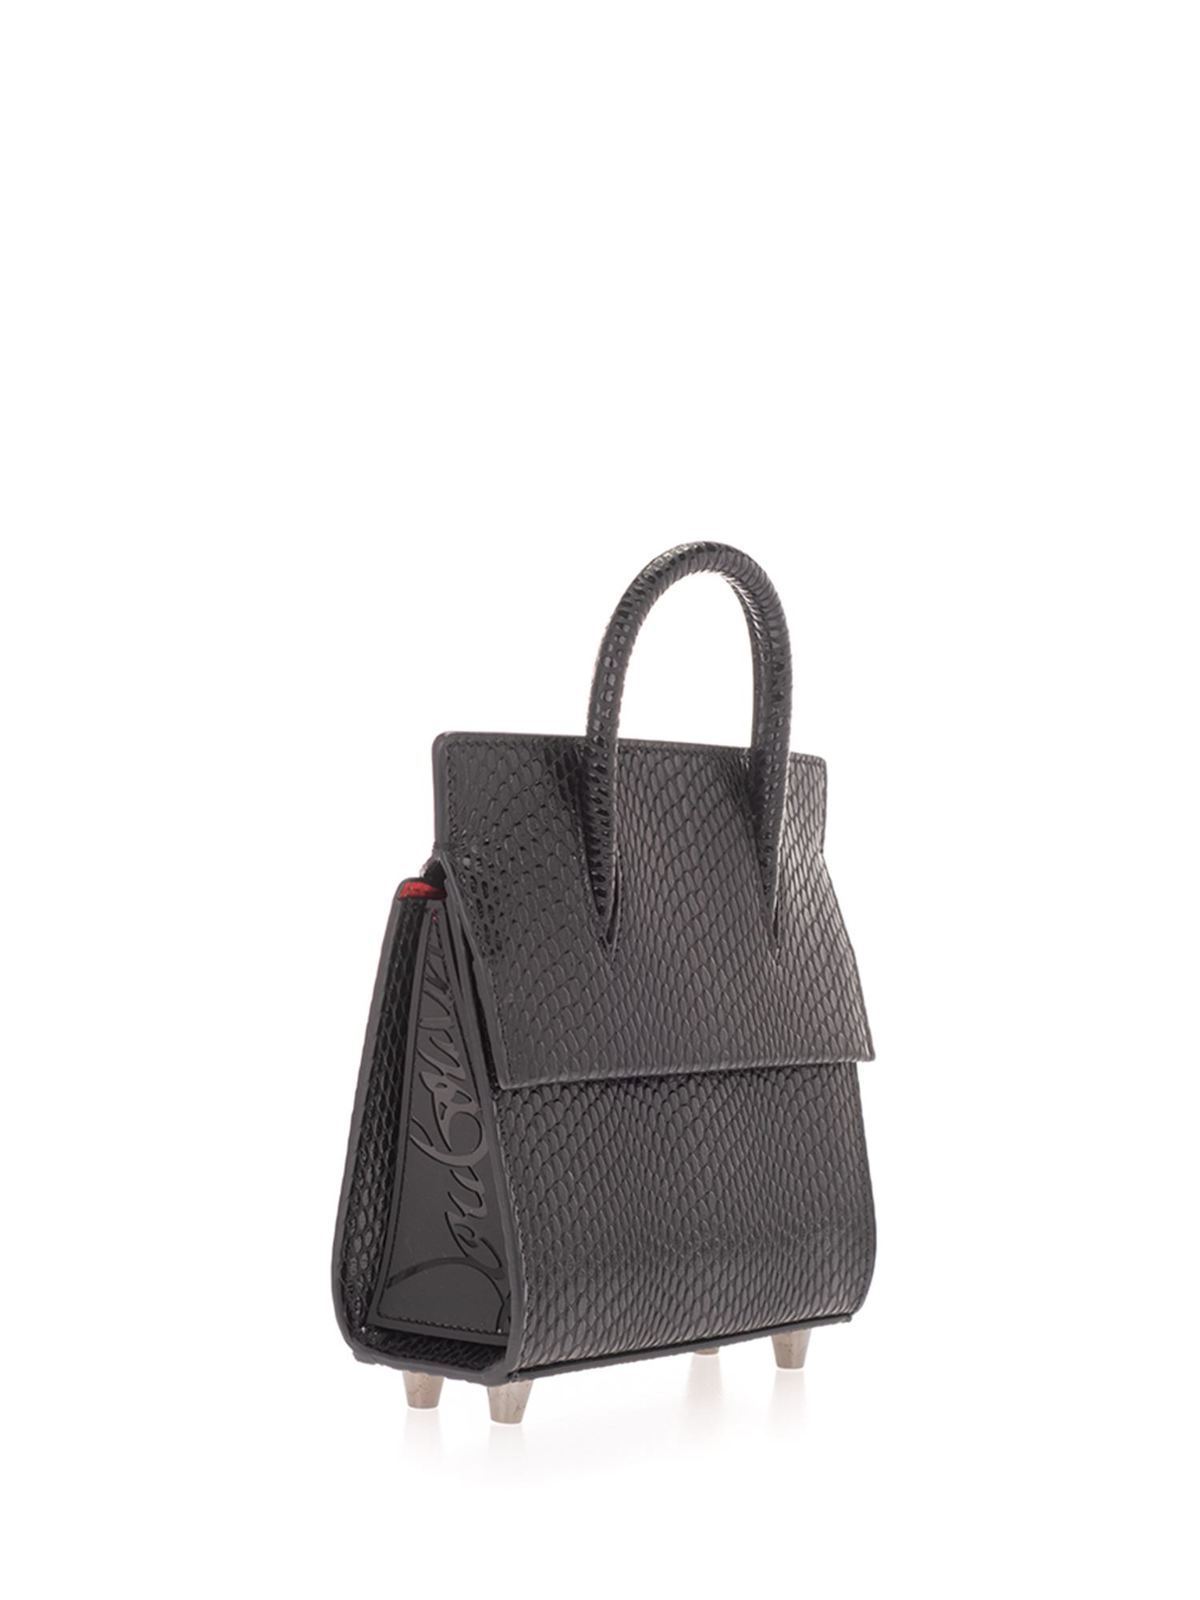 Totes bags Christian Louboutin - Paloma Top Handle Mini bag in 